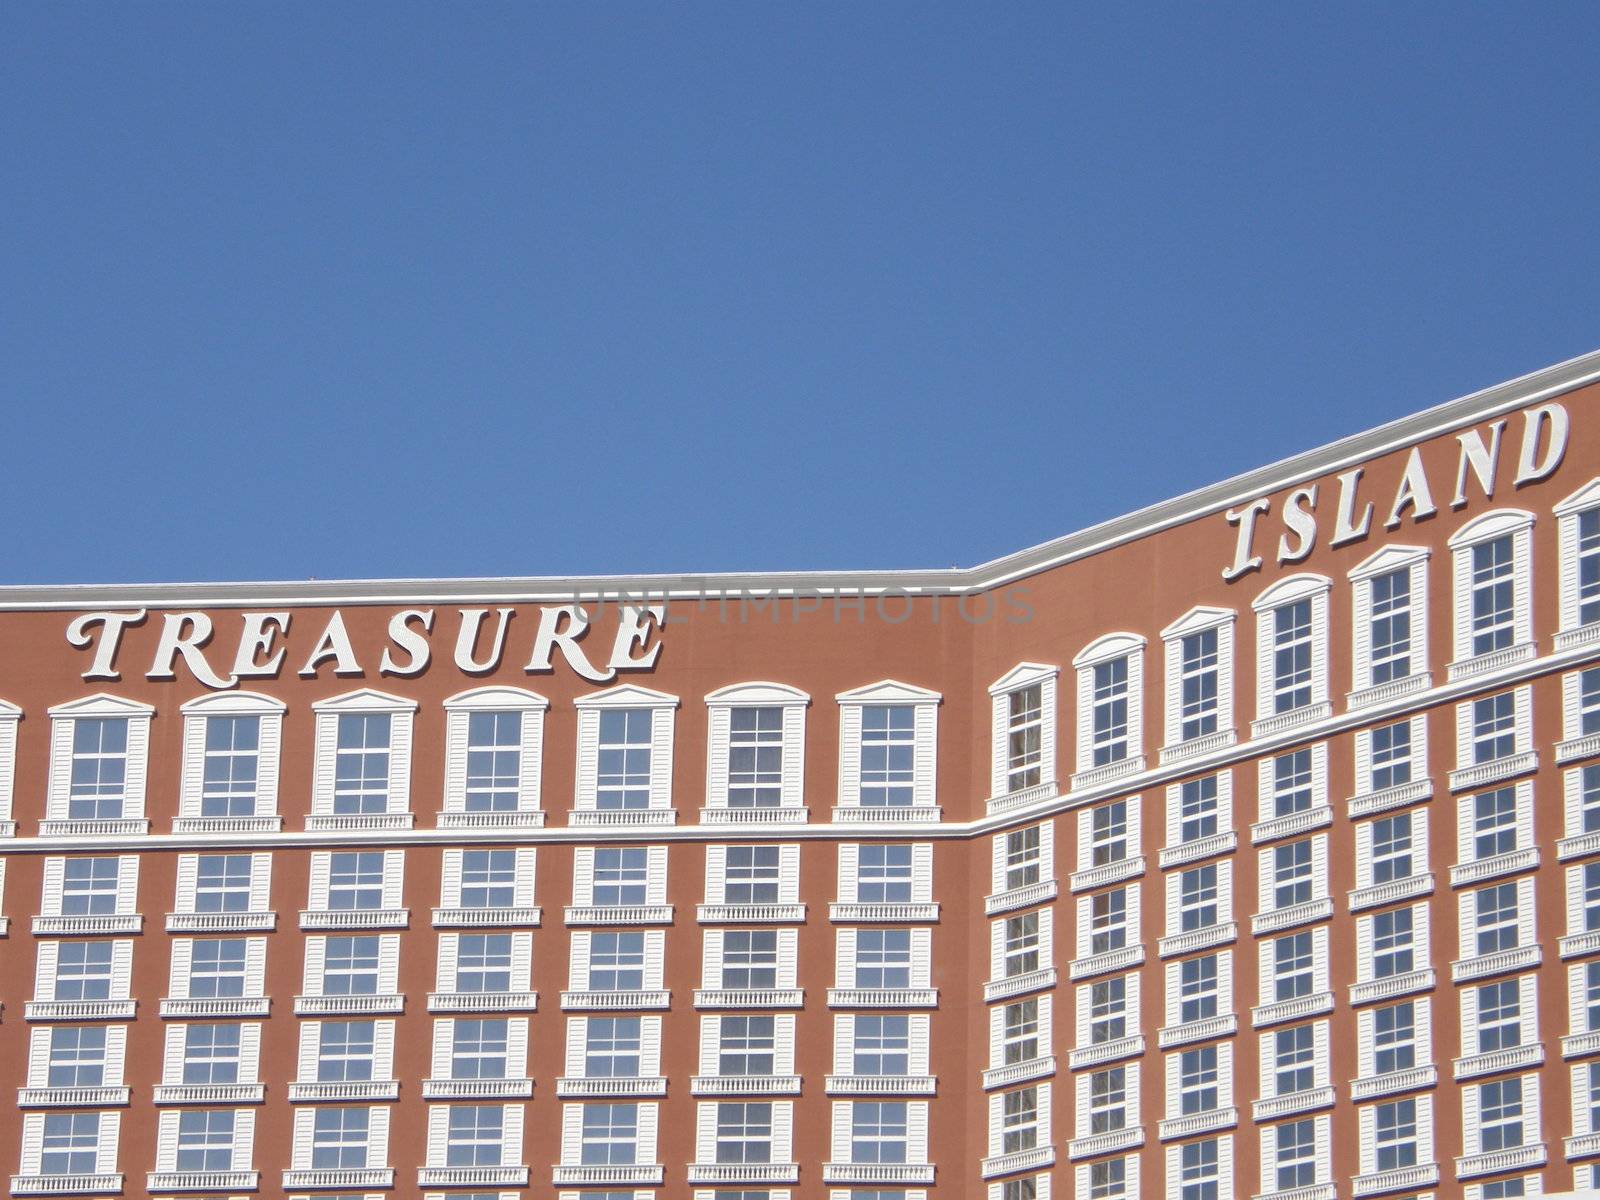 Treasure Island in Las Vegas by sainaniritu